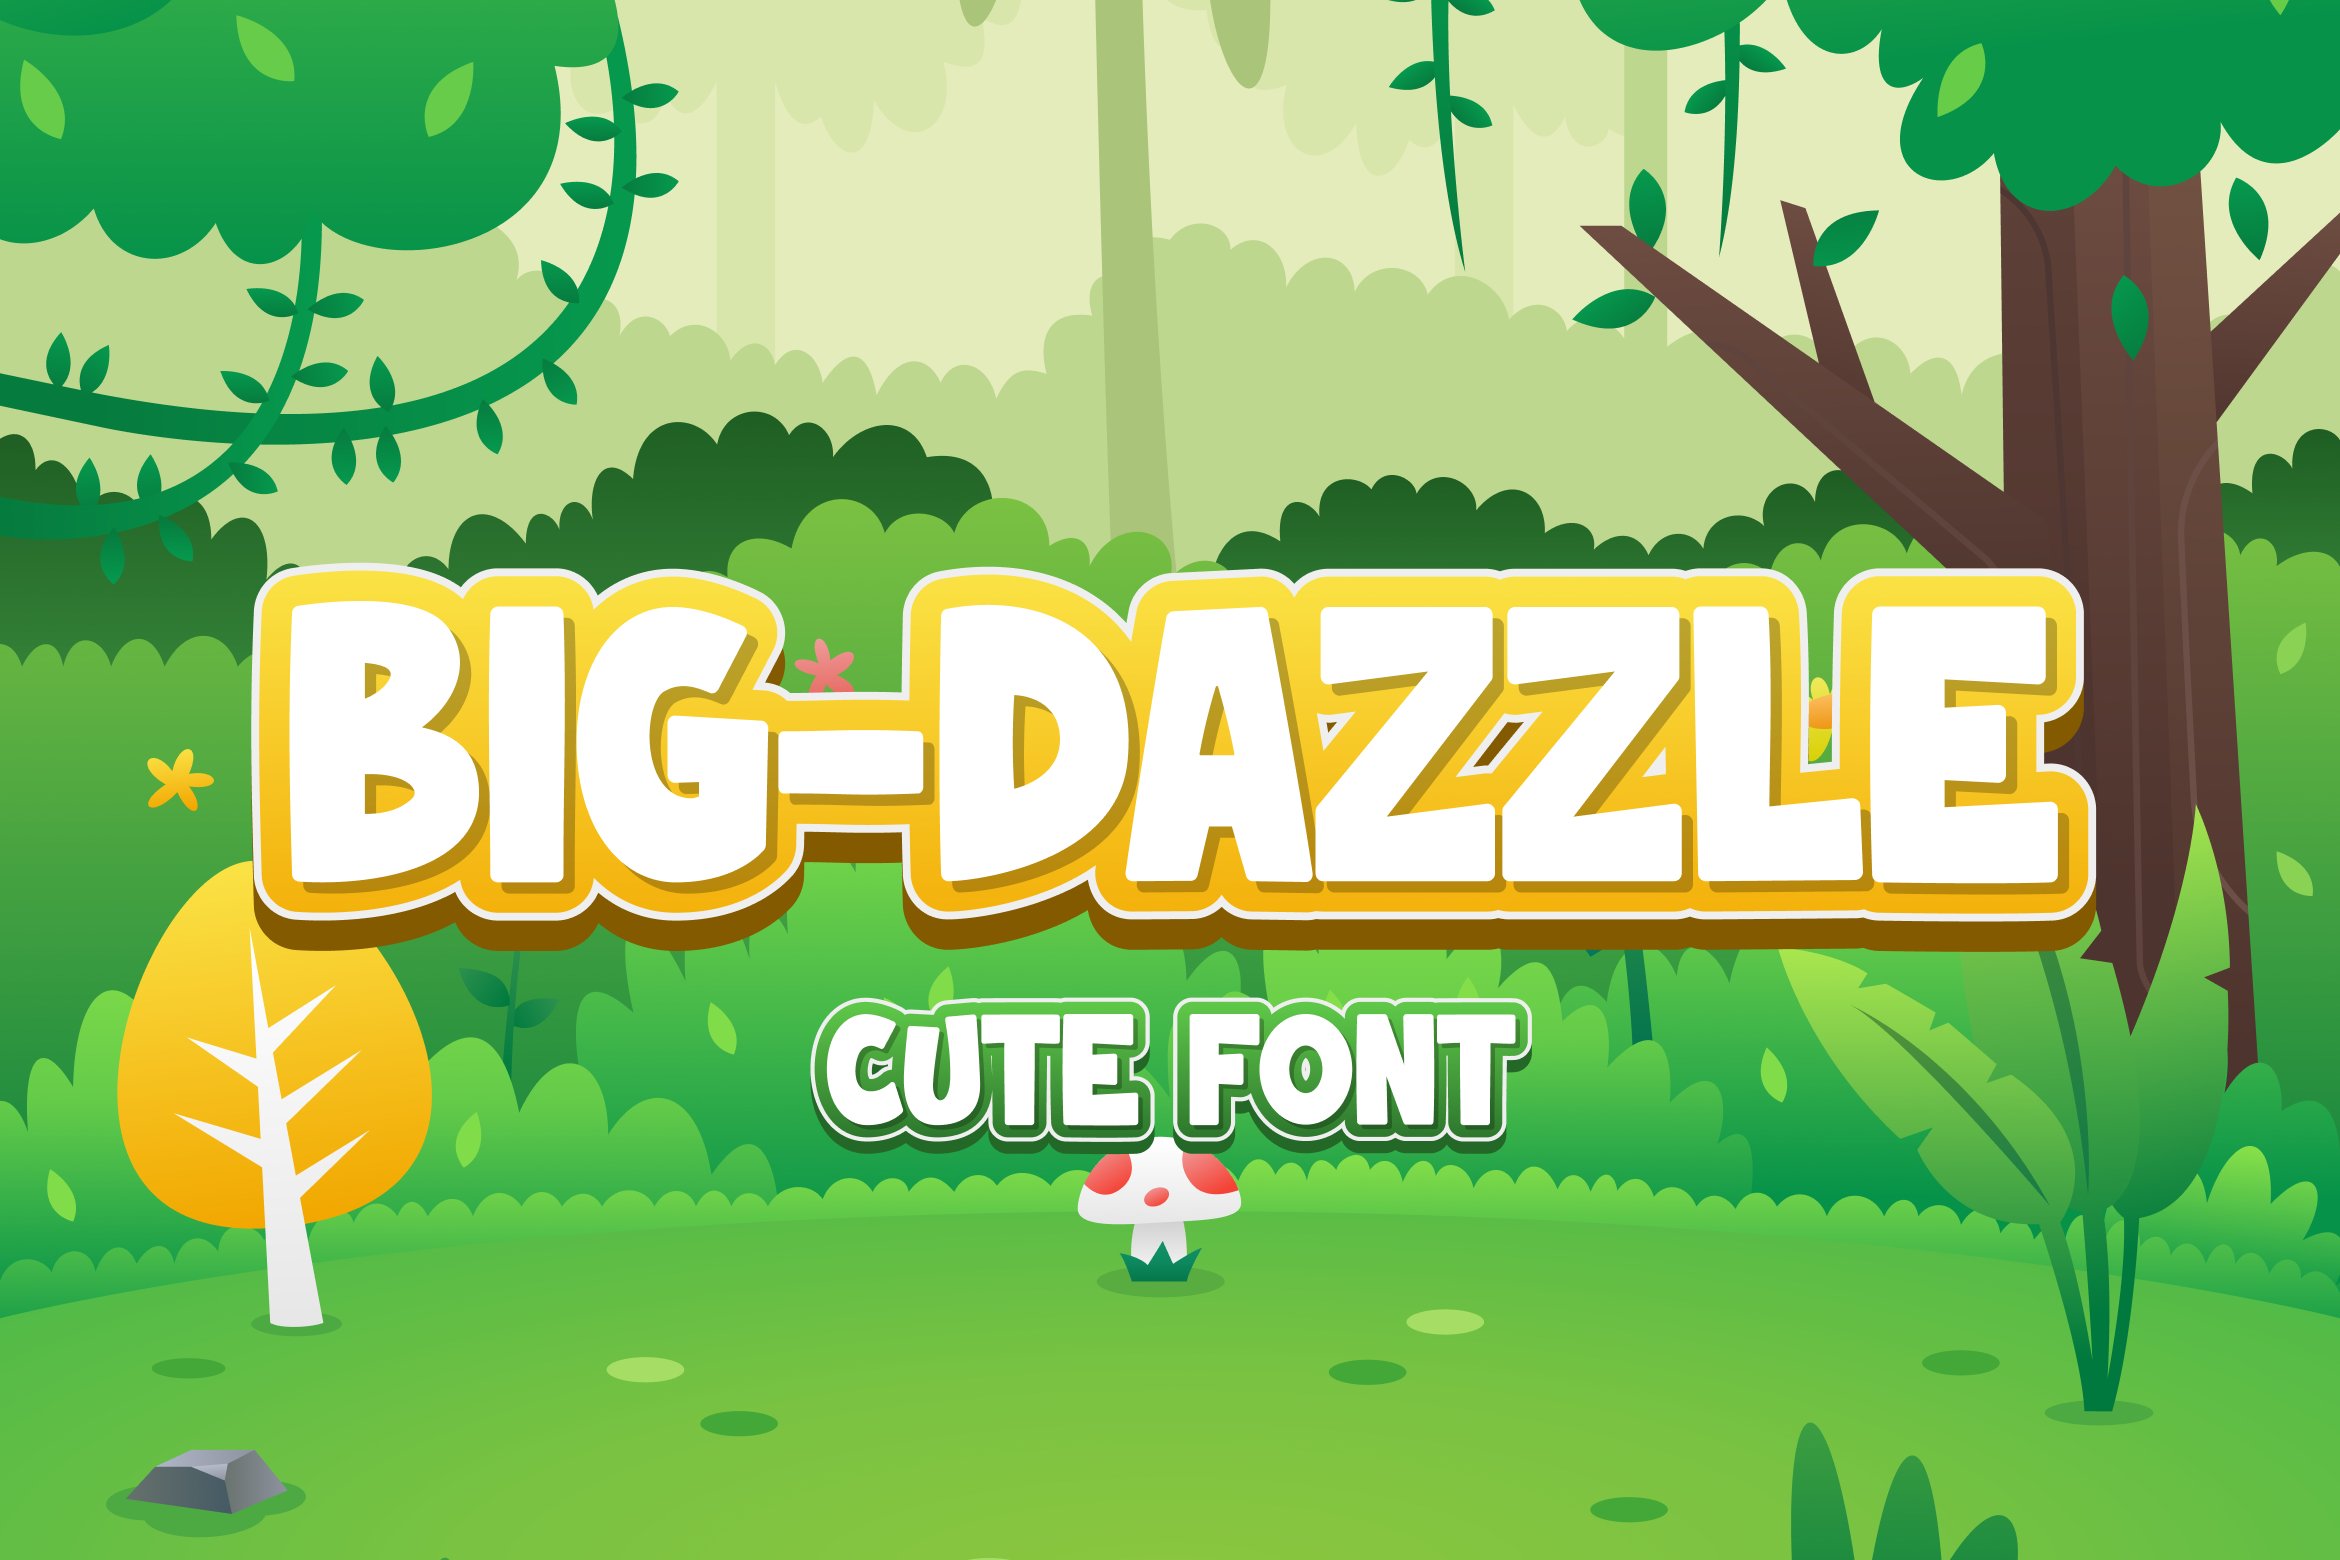 BIG DAZZLE – Cute Font cover image.